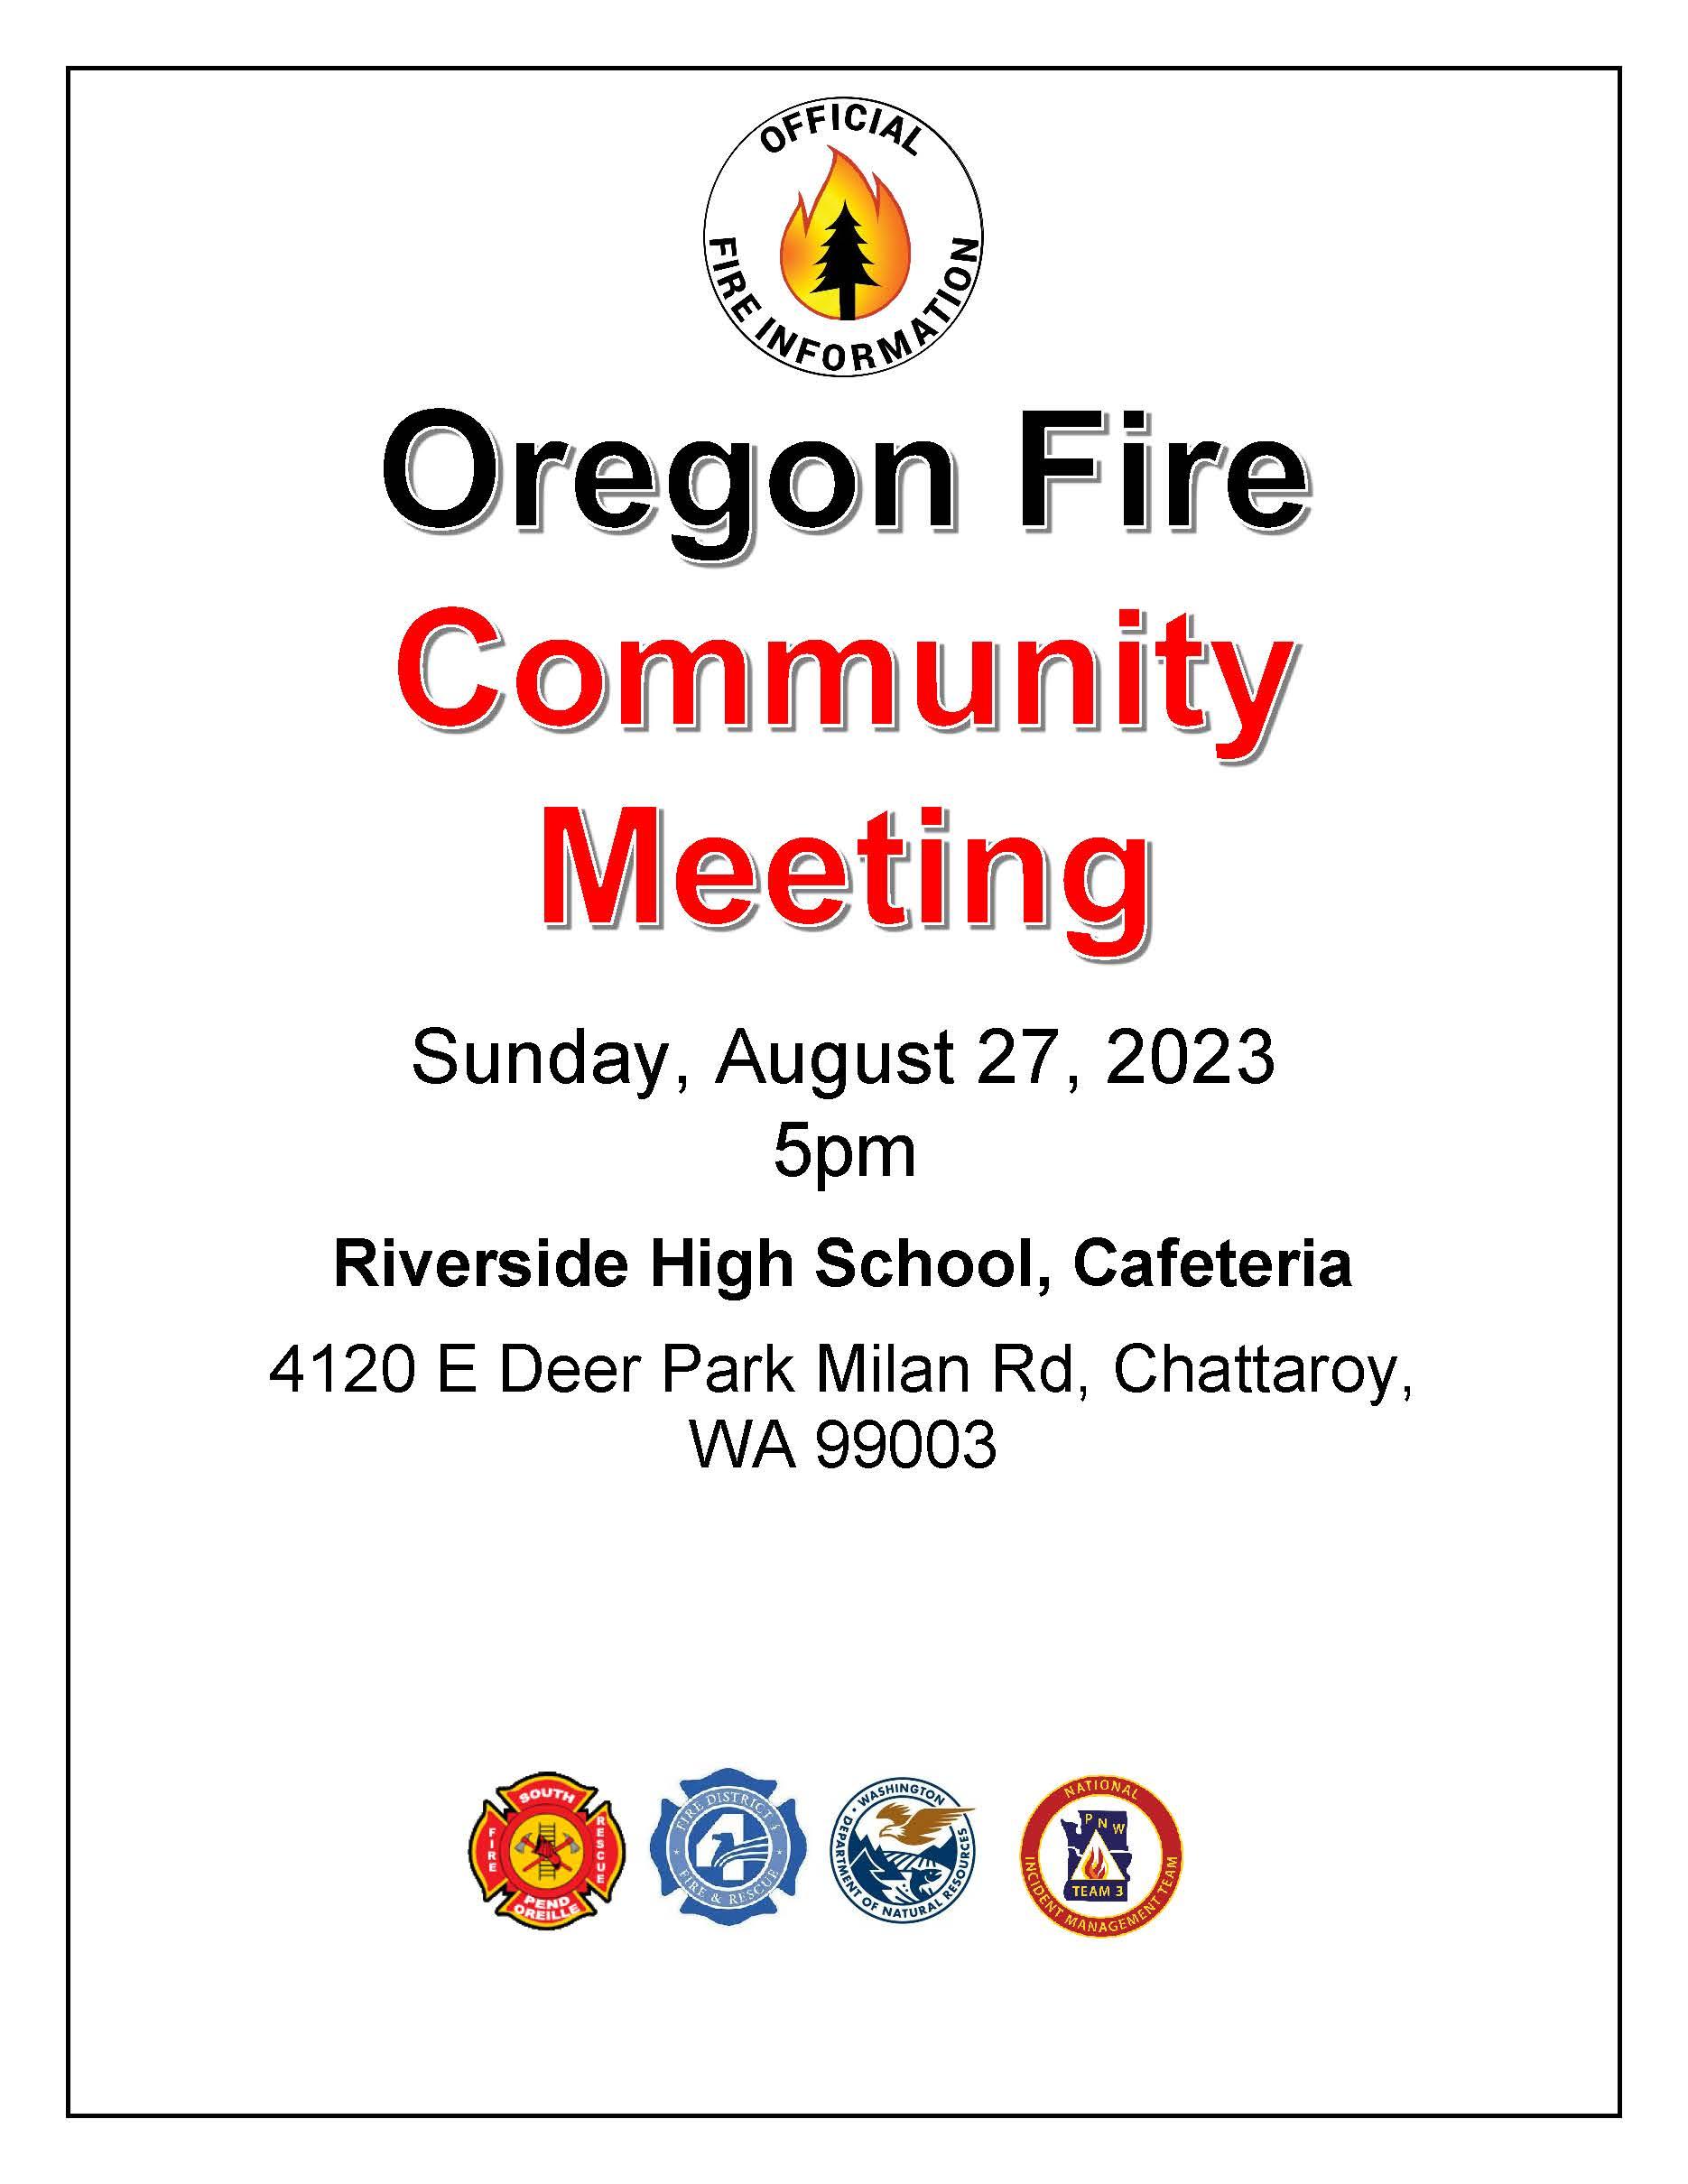 Community Meeting Flyer